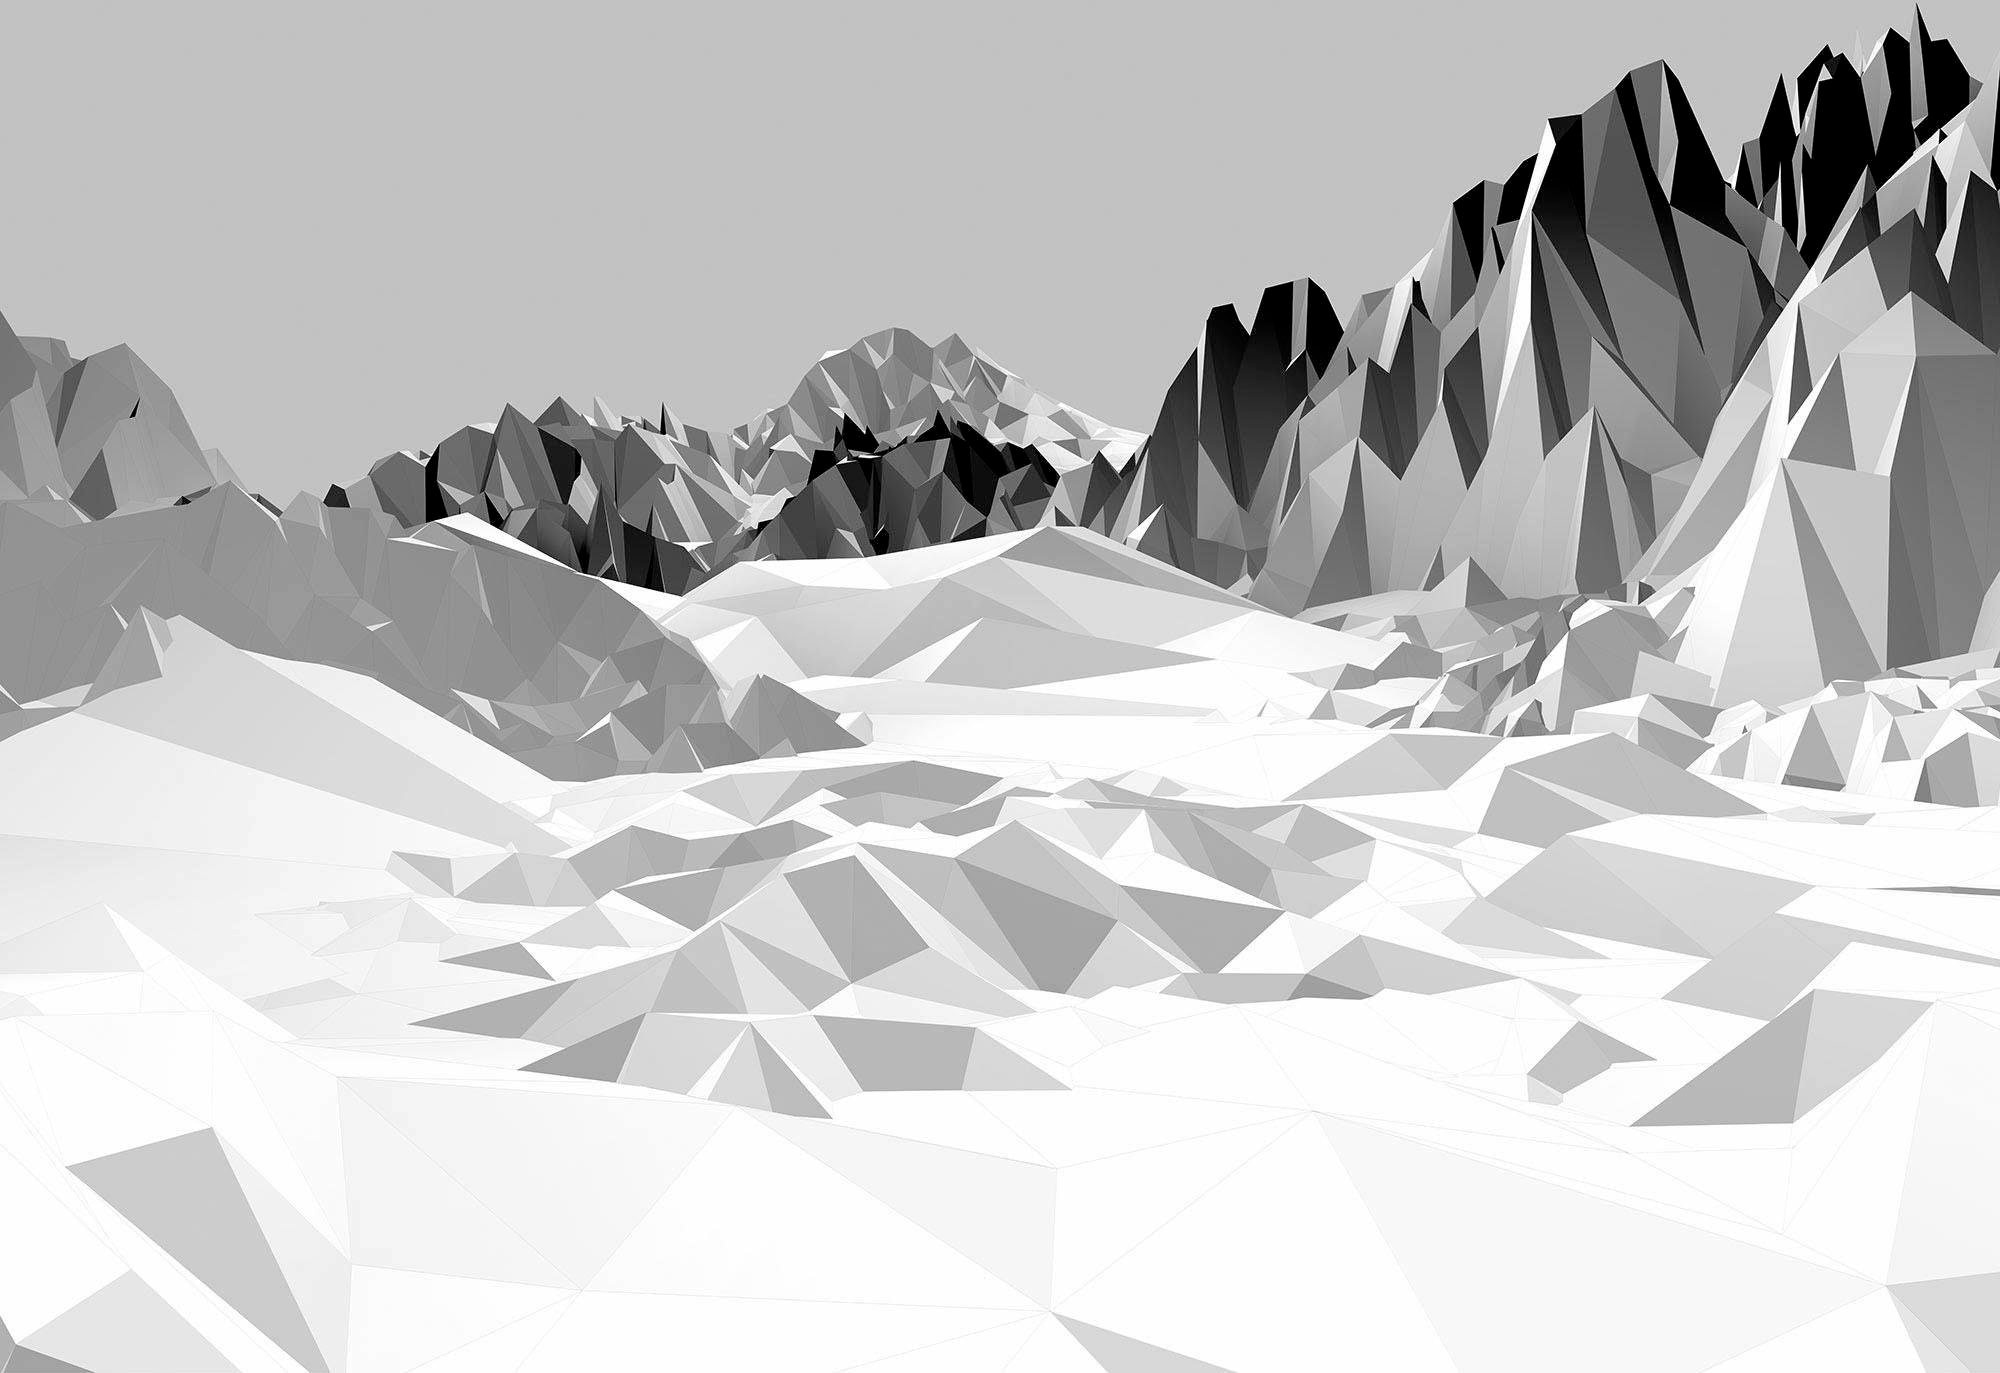 Fototapete »Icefields«, 368x254 cm (Breite x Höhe), inklusive Kleister